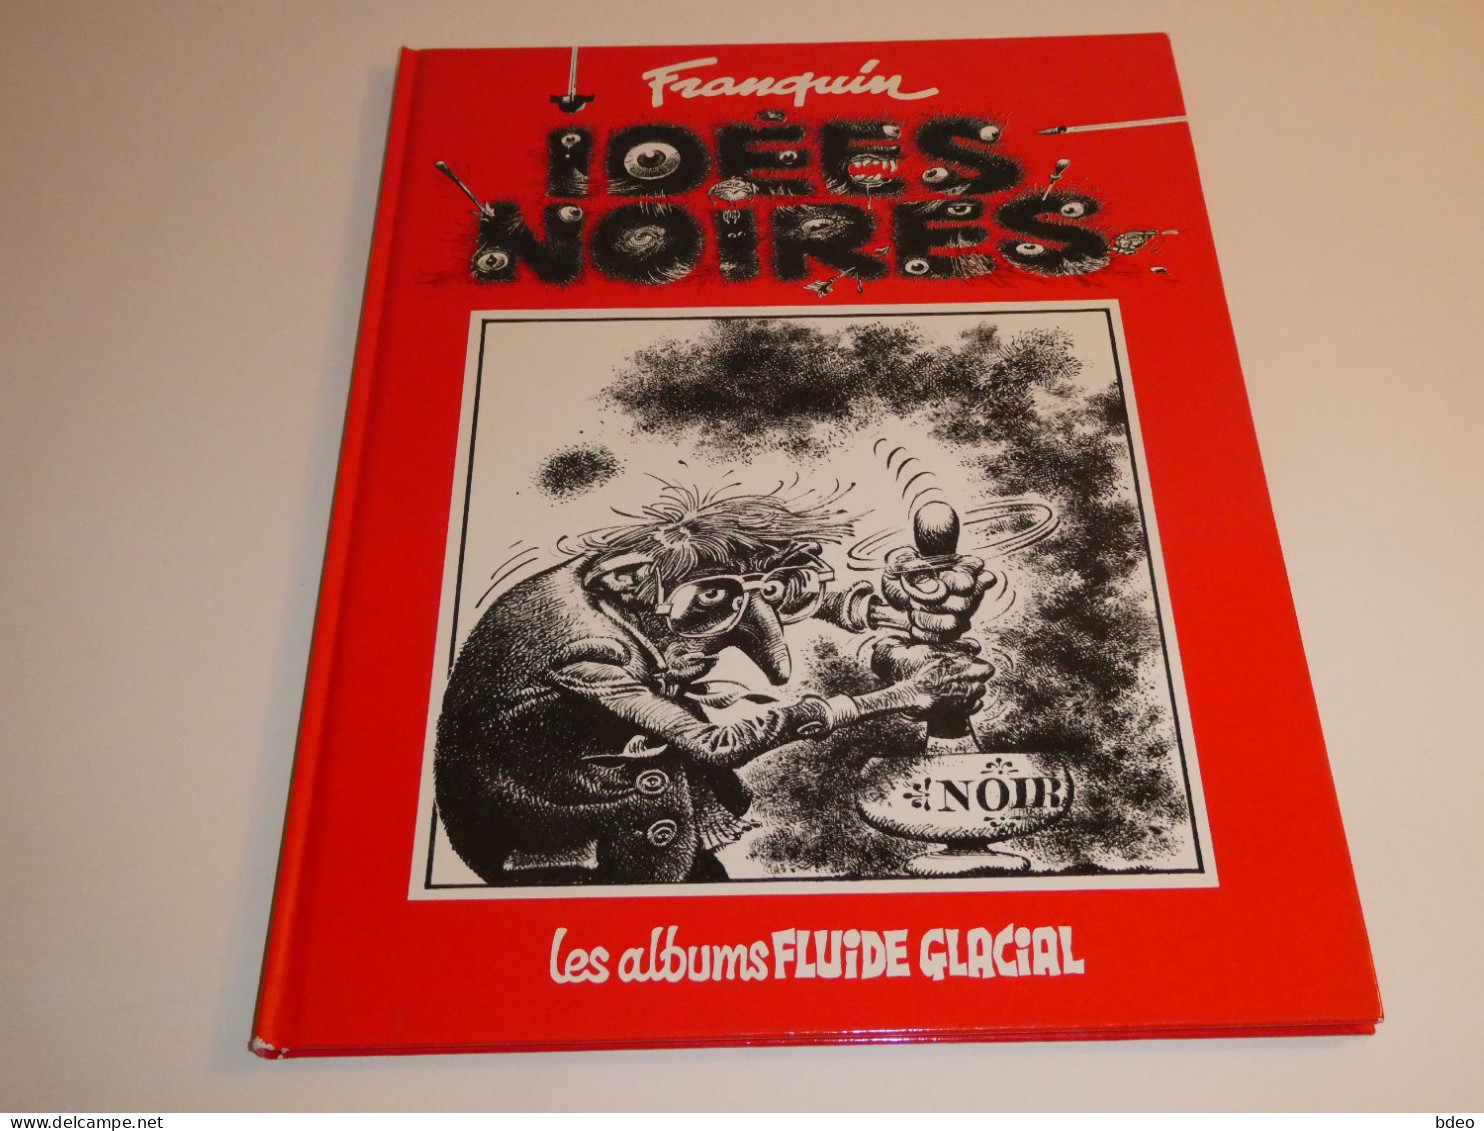 IDEES NOIRES TOME 1 + FLUIDE GLACIAL SERIE OR / FRANQUIN / TBE - Originele Uitgave - Frans